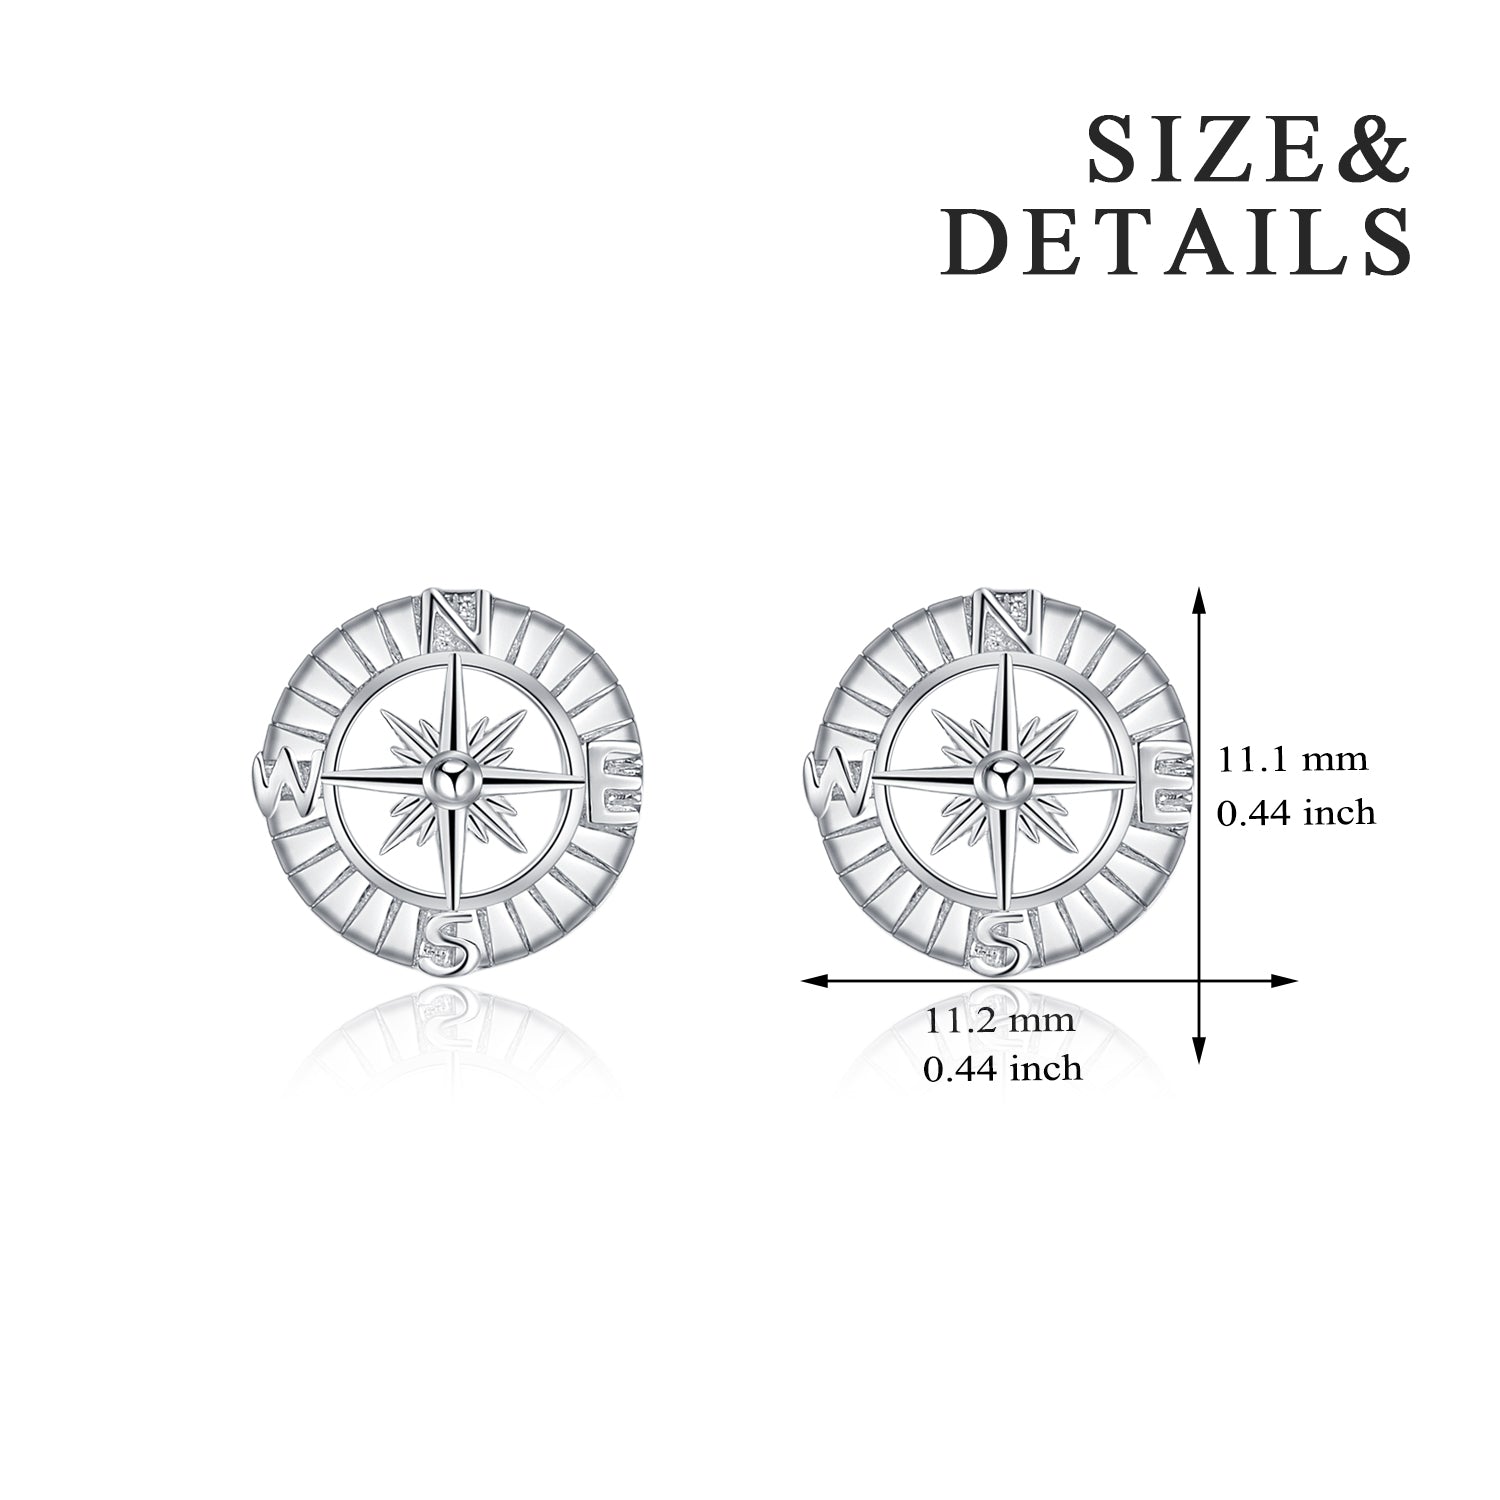 Compass Stud Earring Round Circle Geometric Design Women Men Earrings